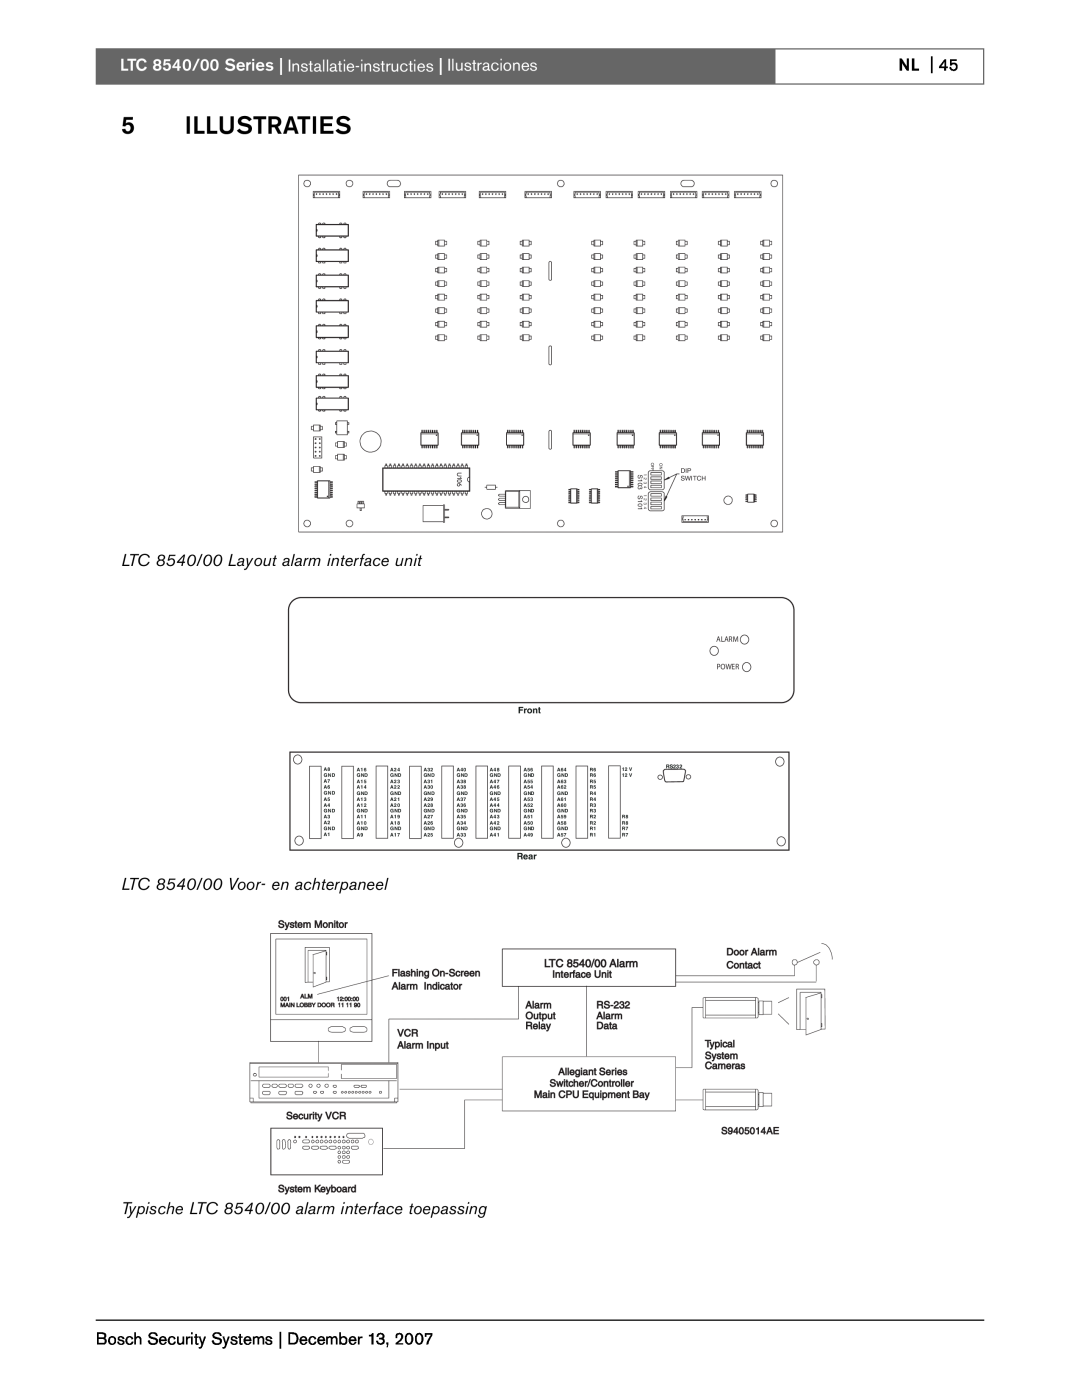 Bosch Appliances LTC 8540/00 instruction manual 5ILLUSTRATIES, Nl, Bosch Security Systems December 